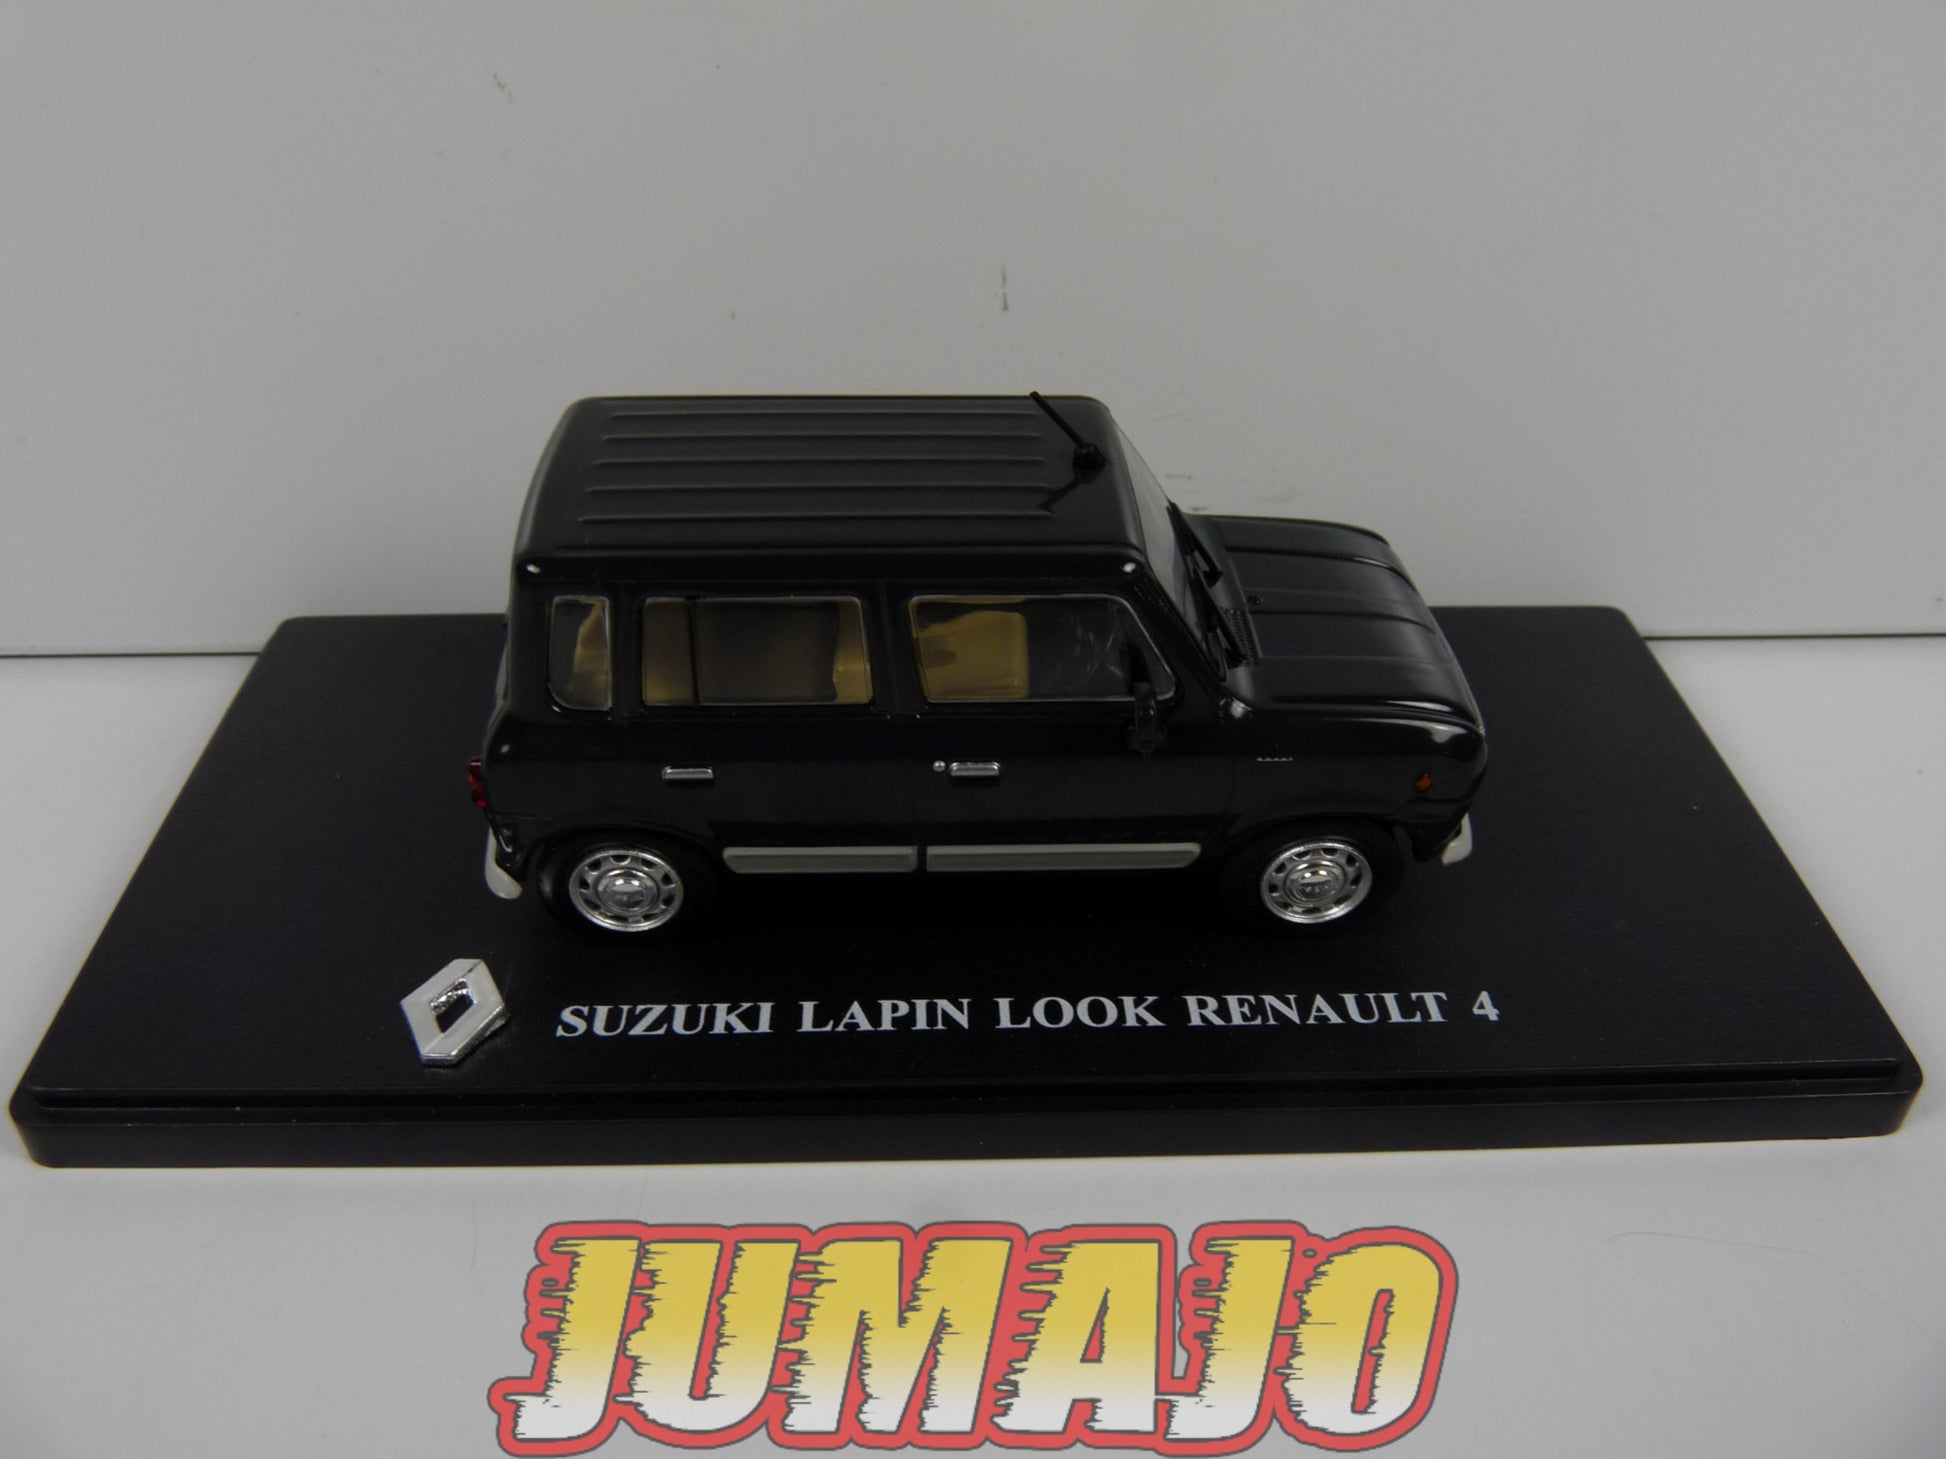 IXO - Voiture de couleur noire Suzuki lapin look – RENAULT 4 - 1